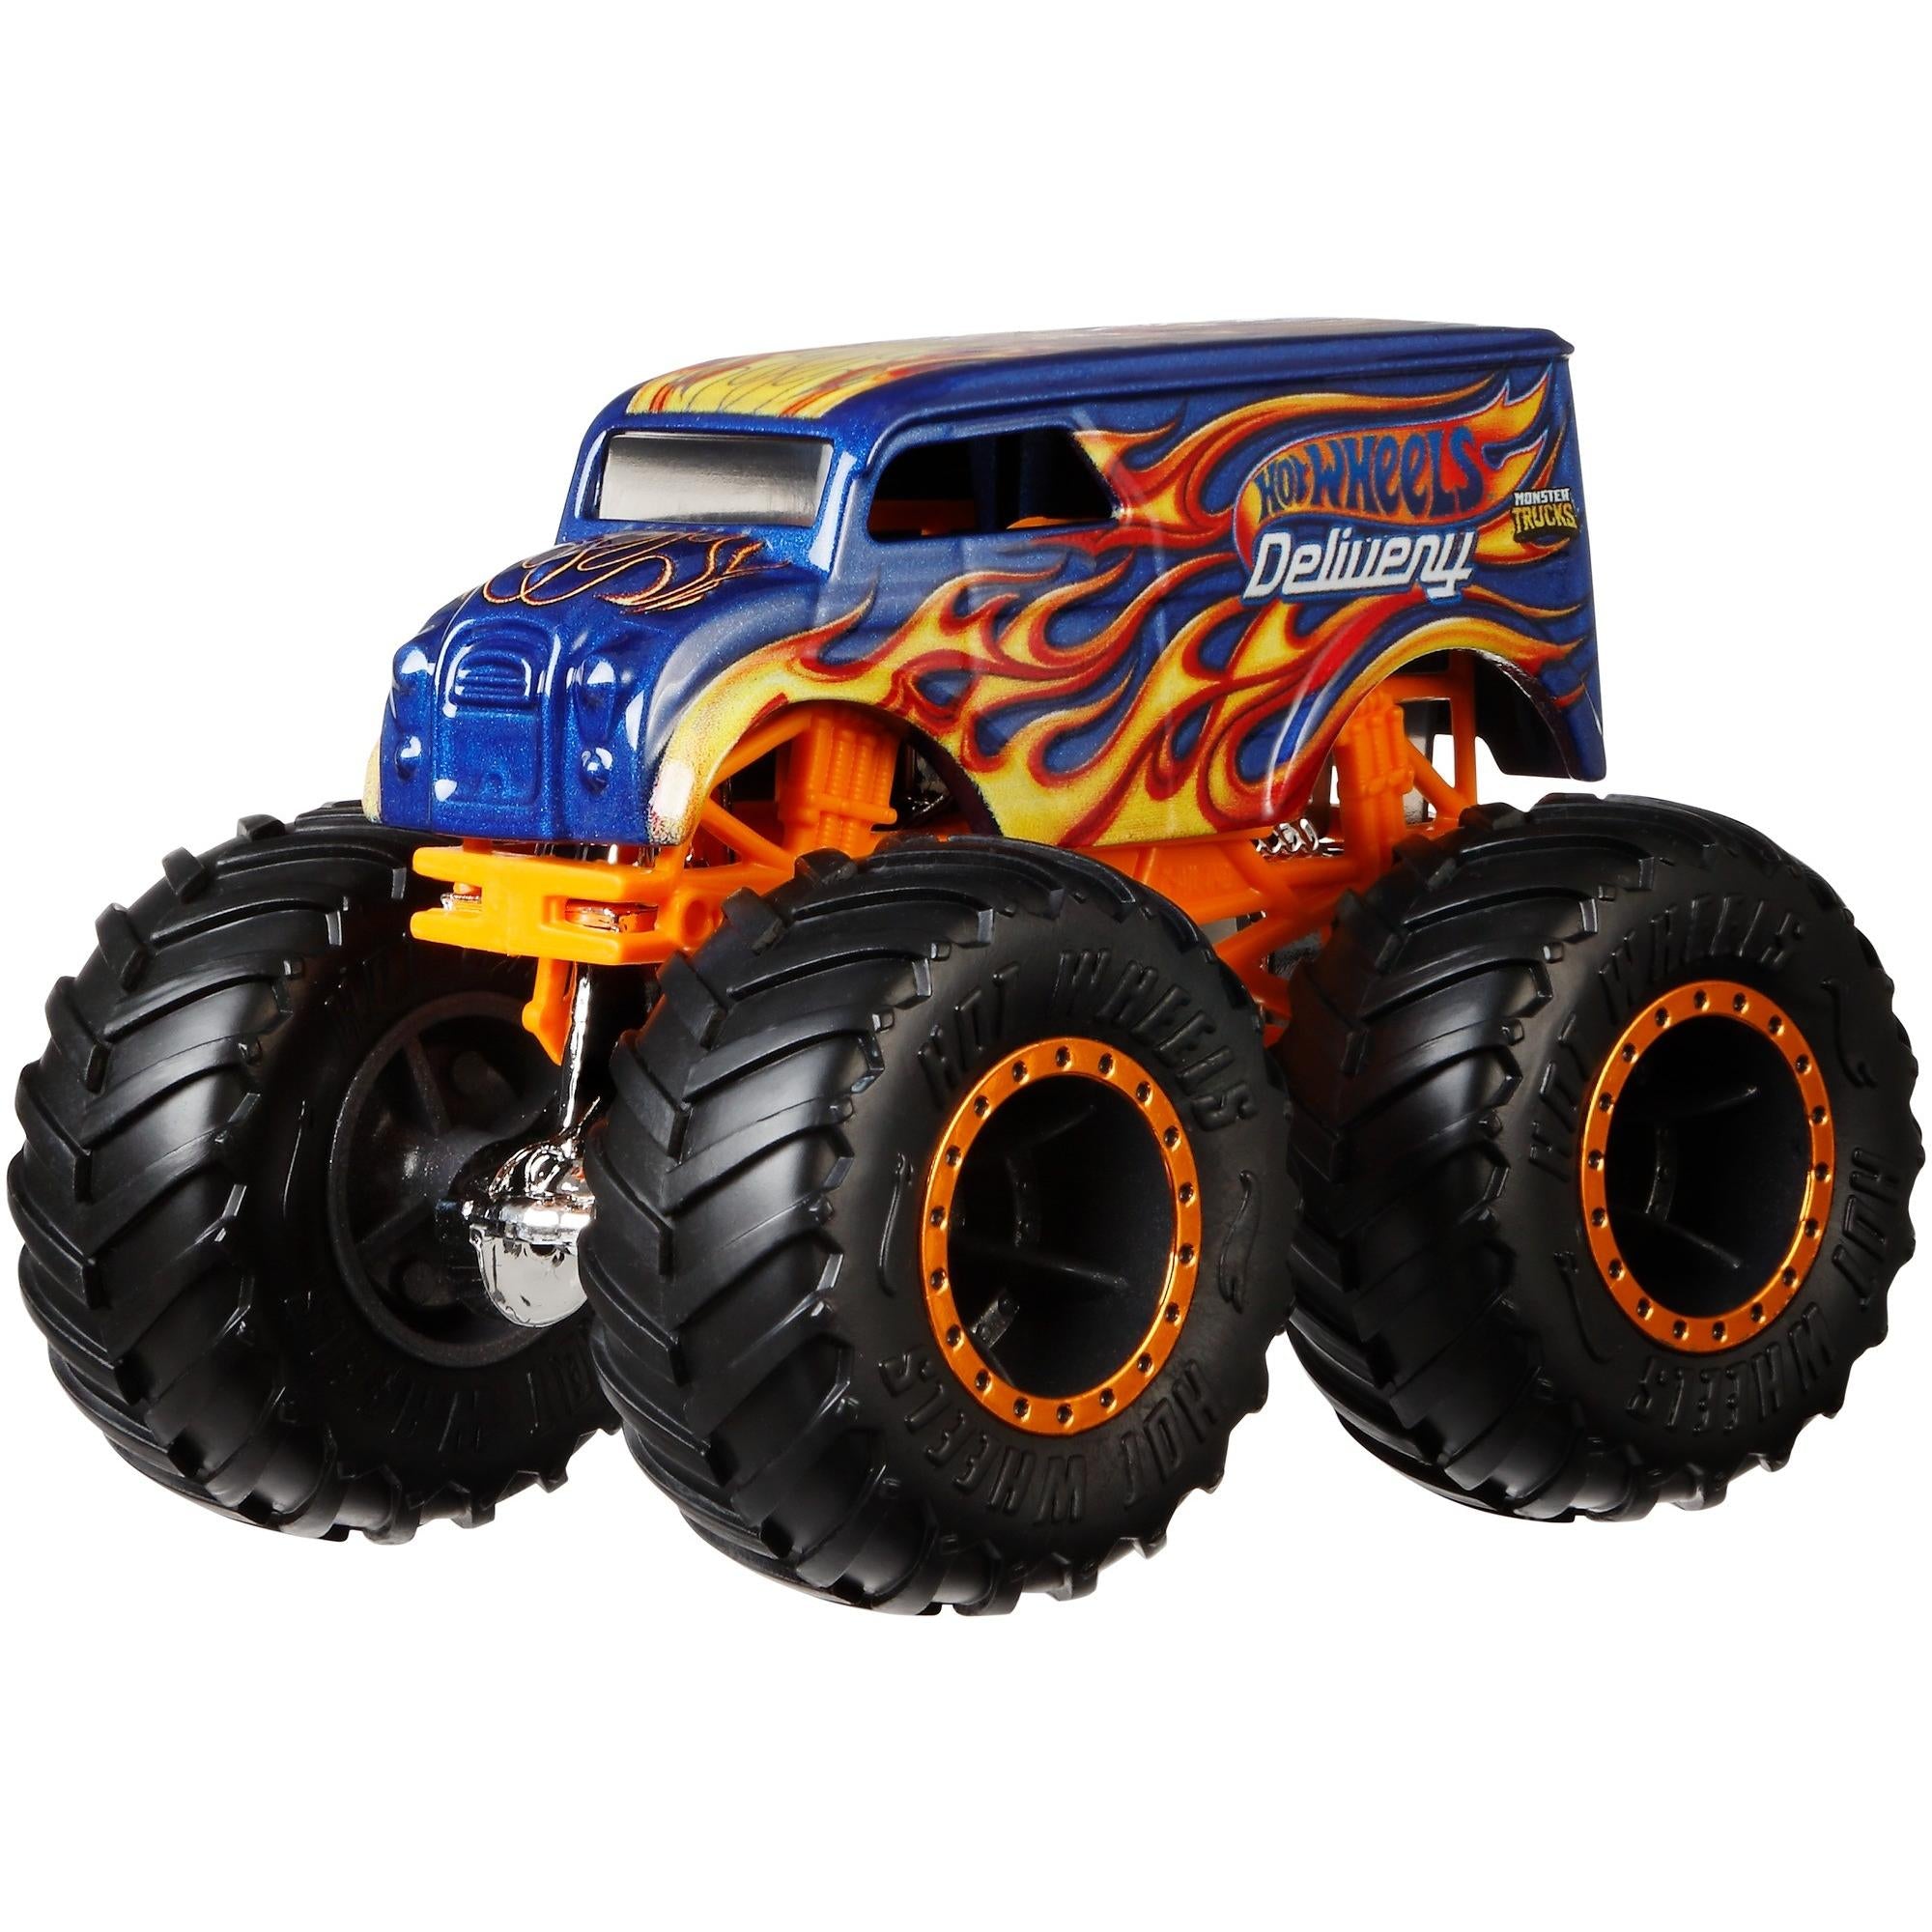 Hot Wheels ® Mattel monster trucks – random model - ACCESSORIES